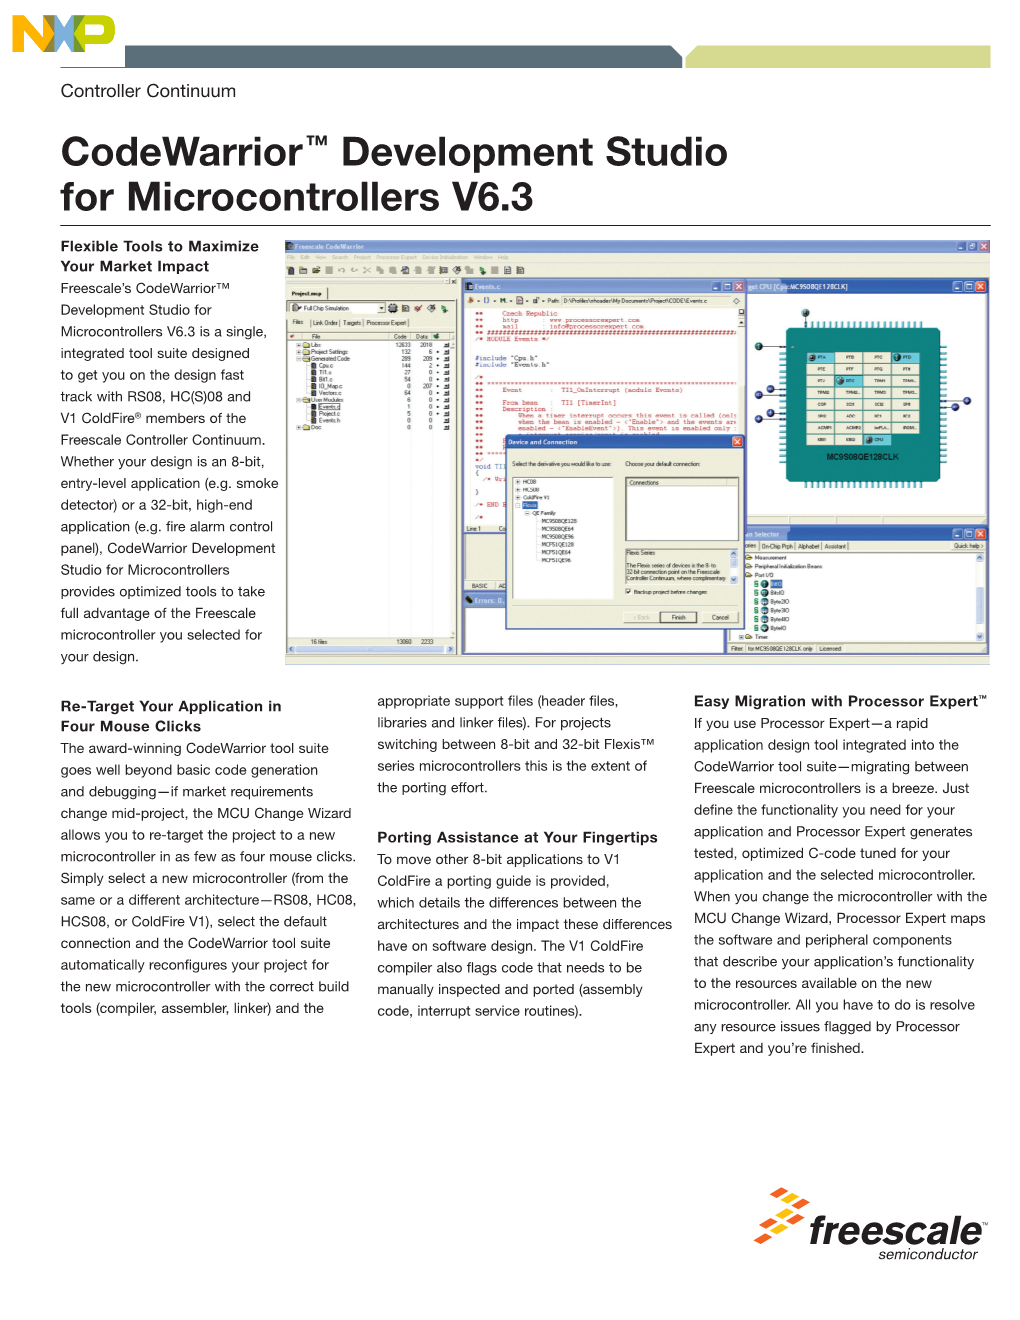 Codewarrior ™ Development Studio for Microcontrollers V6.3